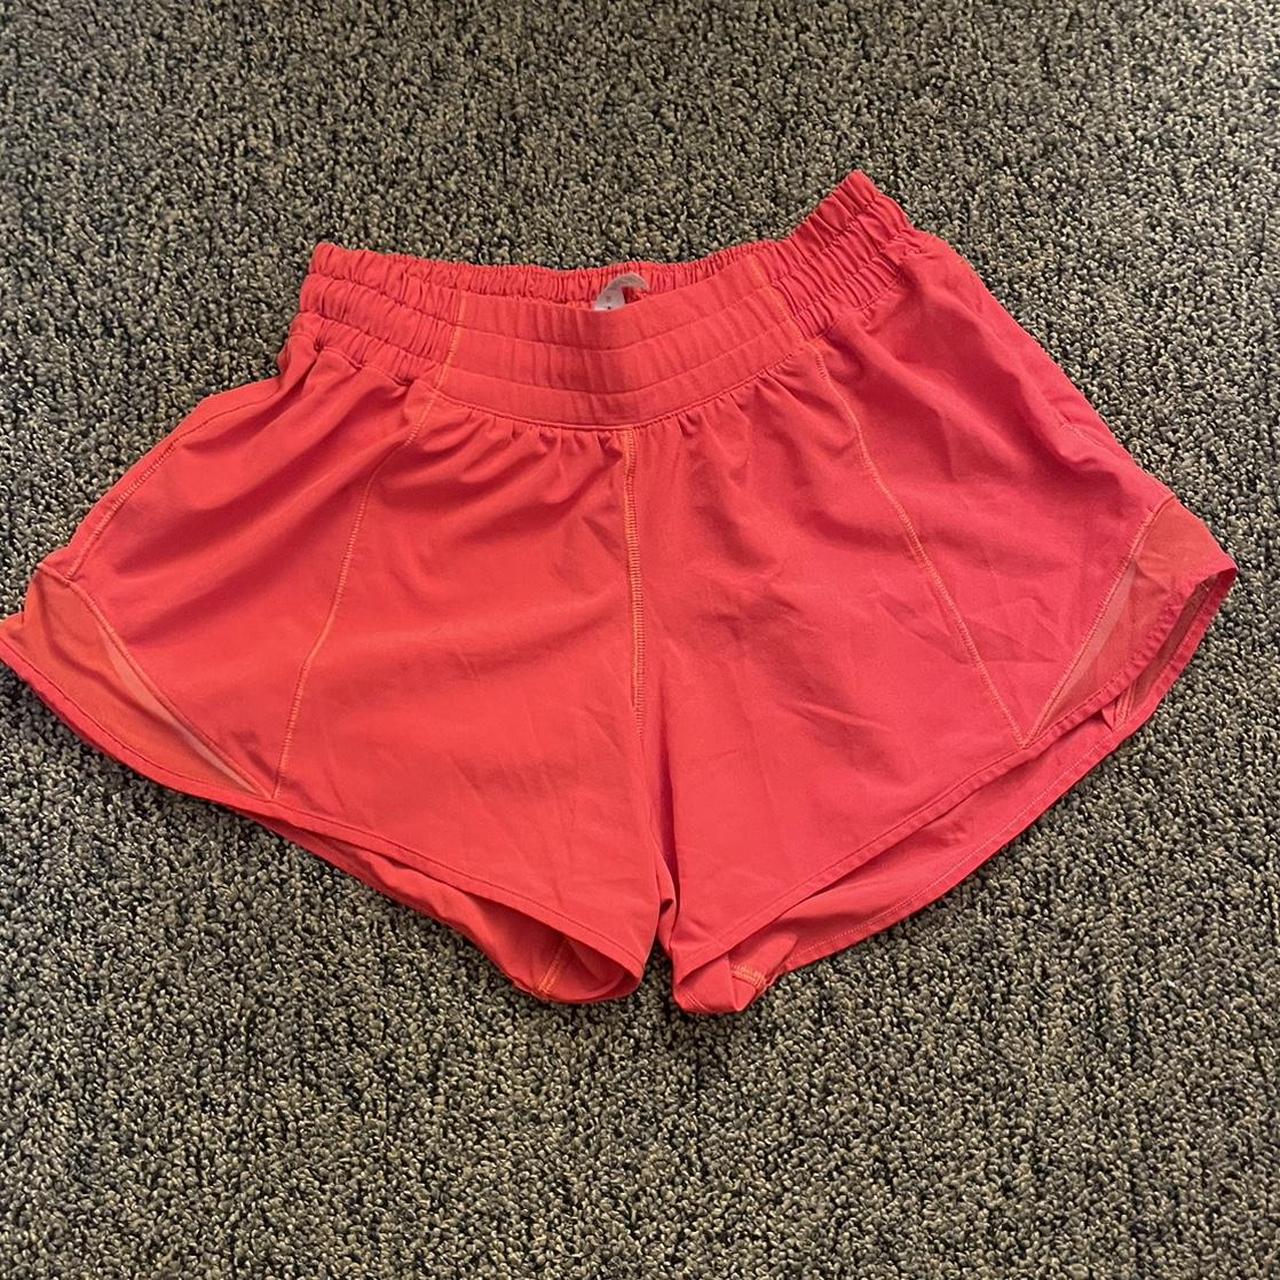 Lululemon Women's Red Shorts | Depop